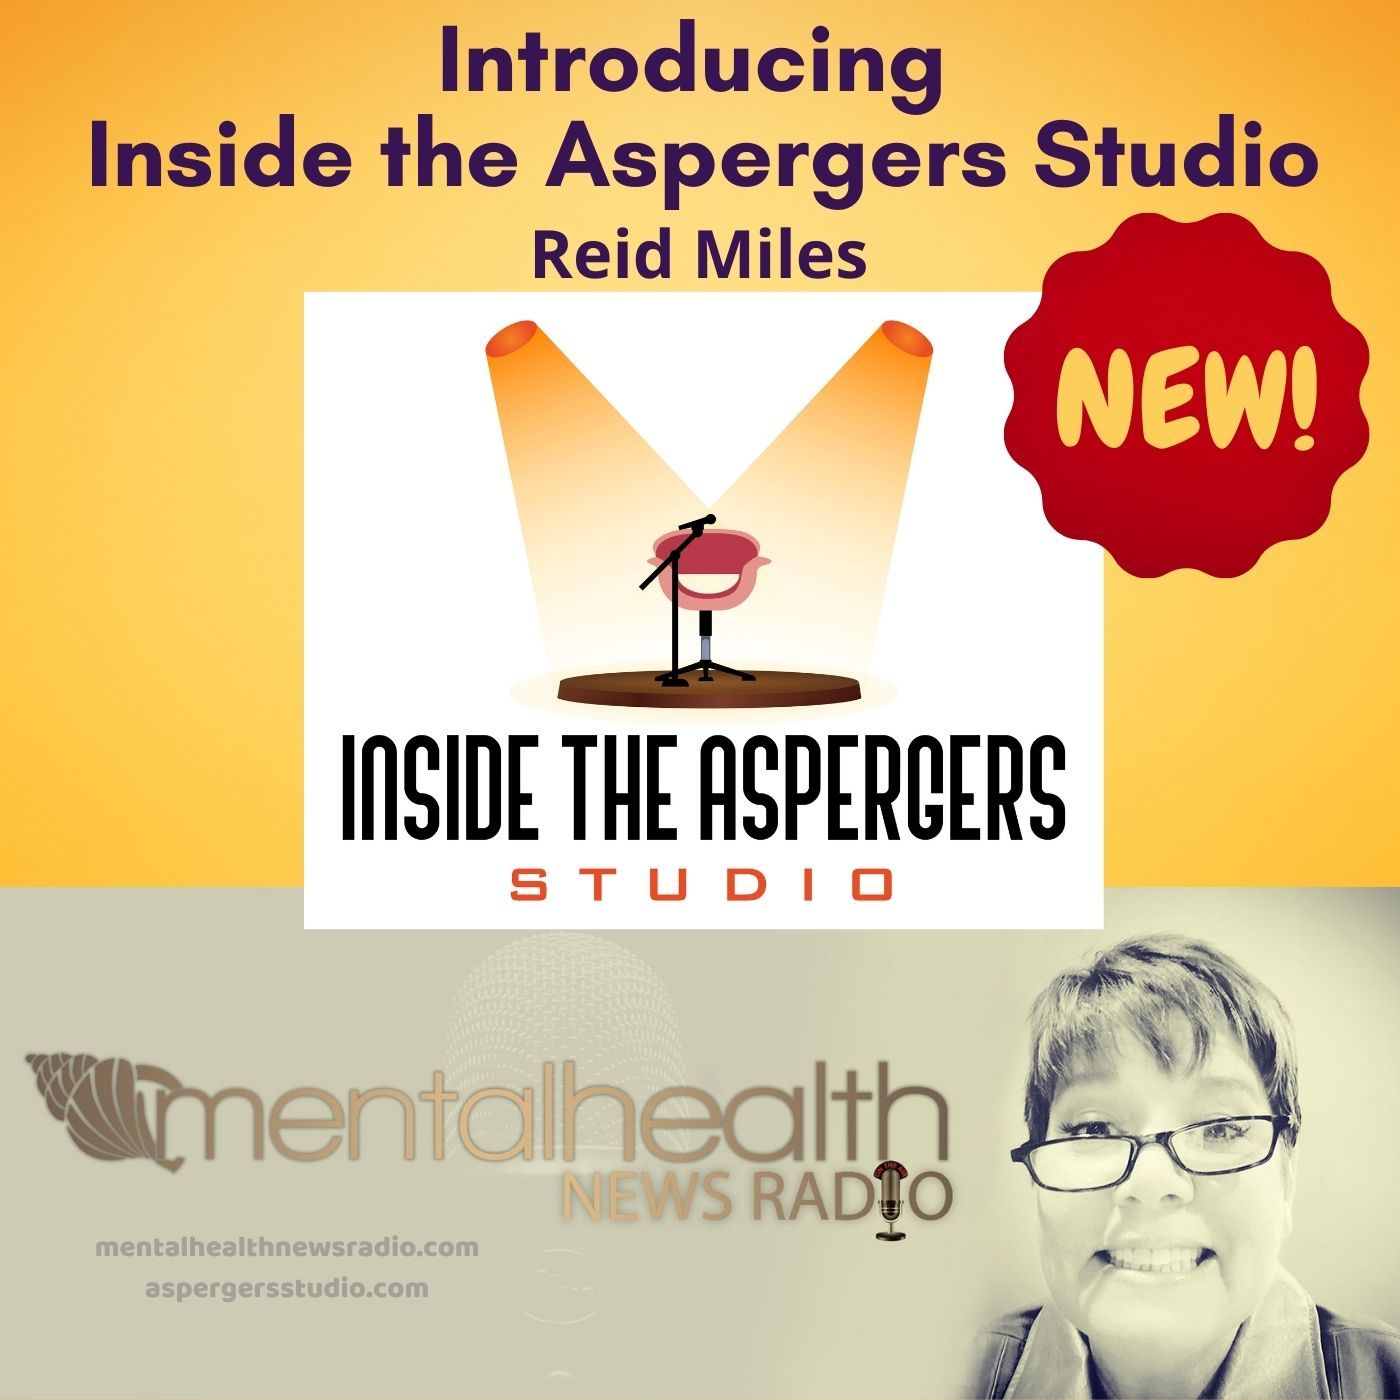 Mental Health News Radio - Introducing Inside the Aspergers Studio